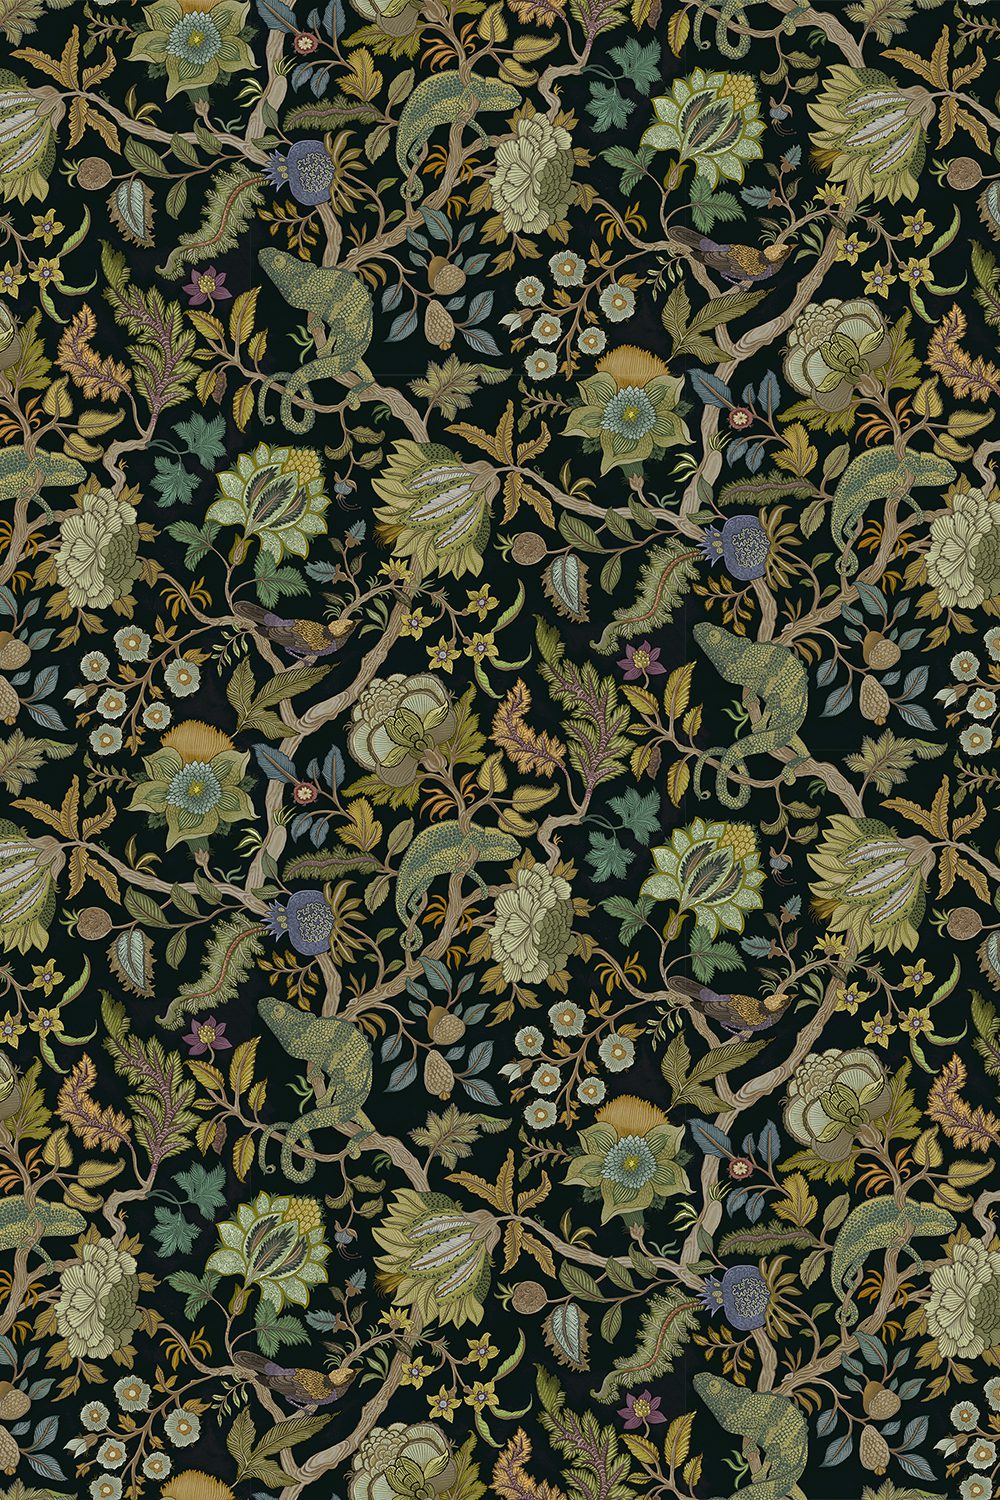 Josephine-munsey-wallpapers-interiors-chameleon-trail-floral-black-green-wallpaper